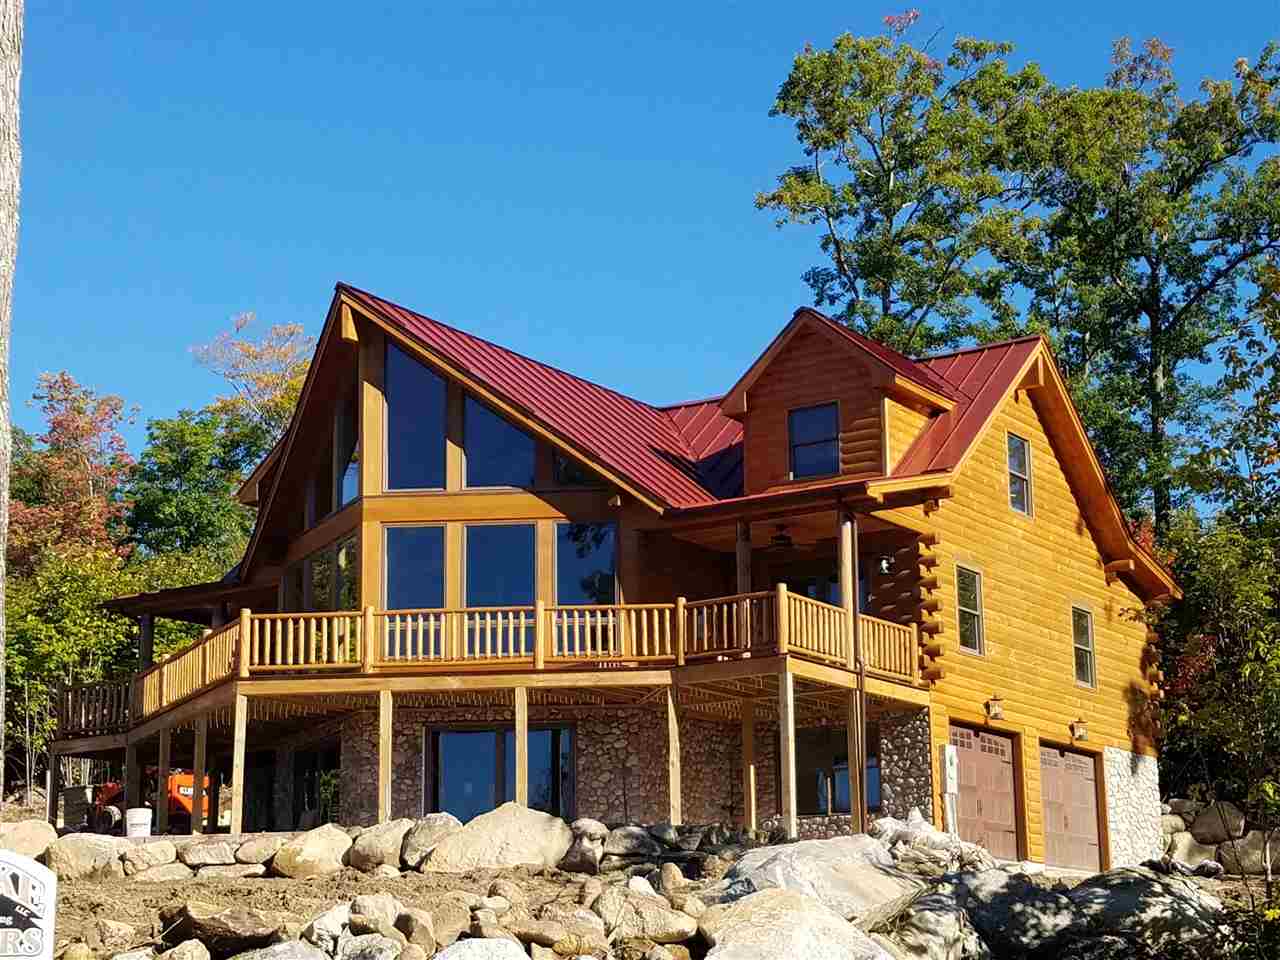 Squam Lake Real Estate For Sale | Squam Lake Waterfront Homes